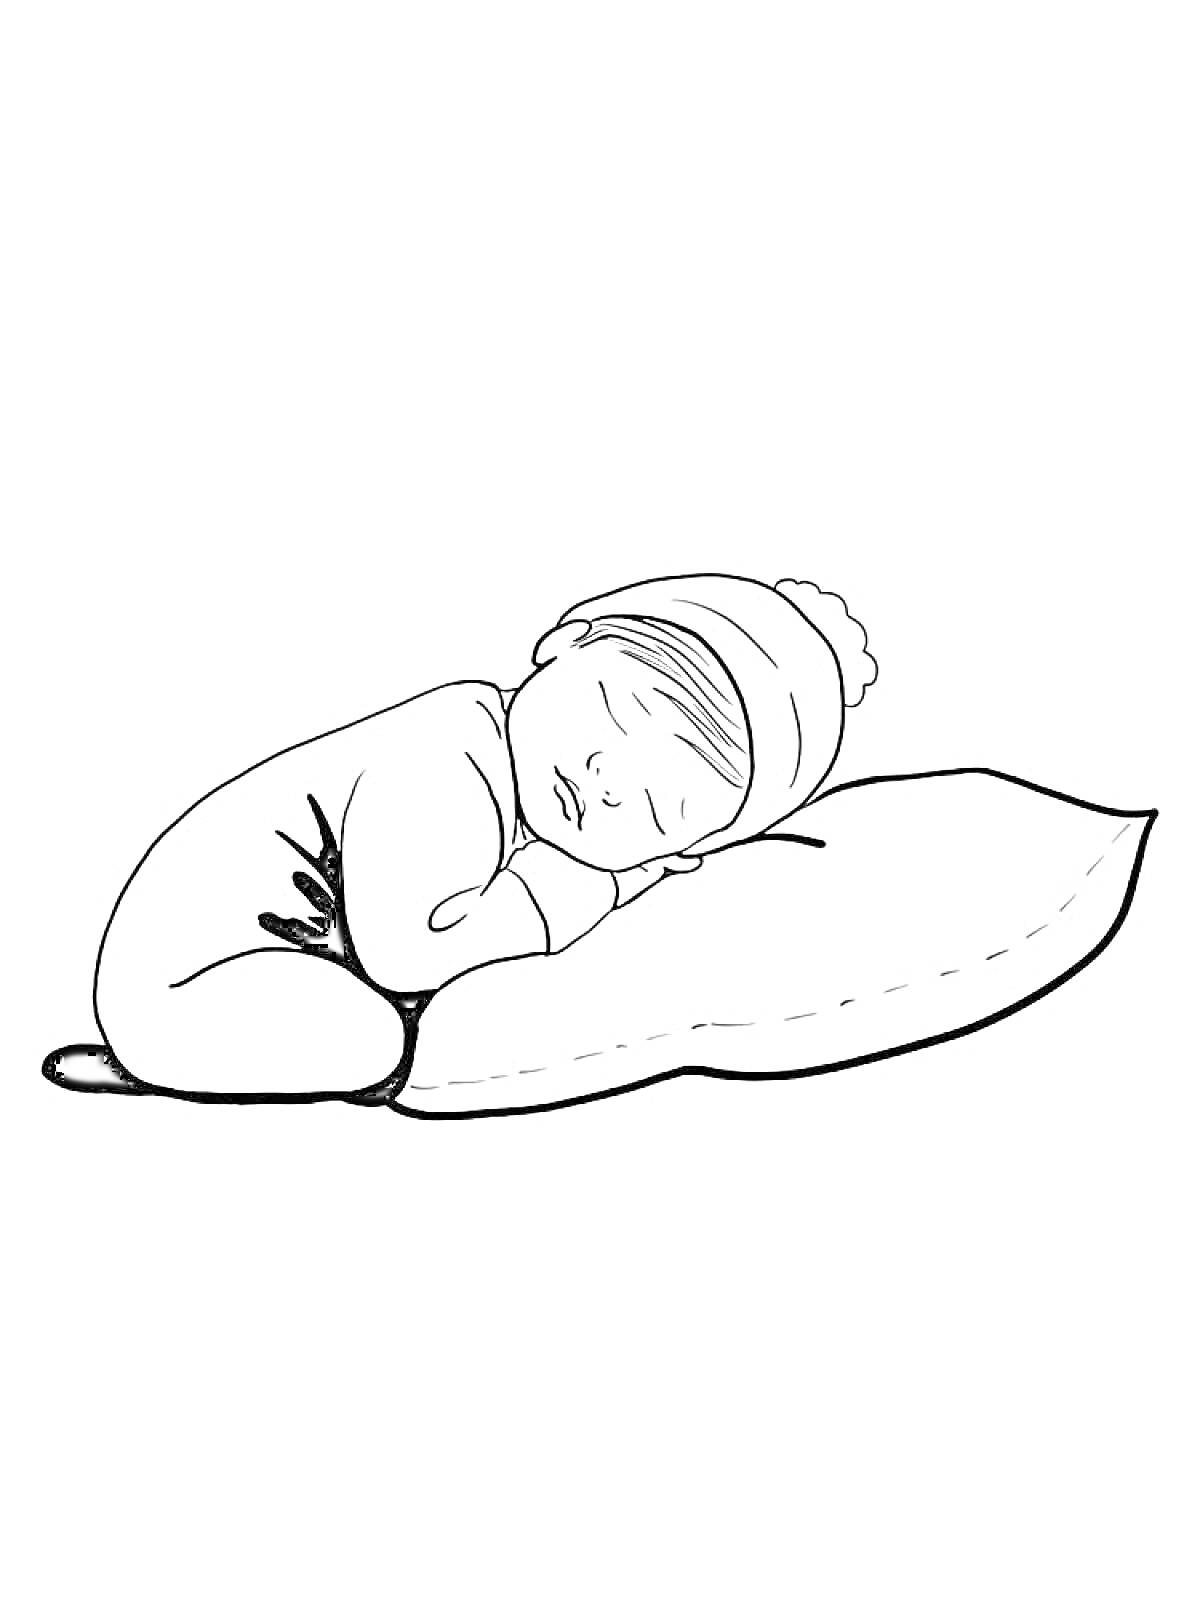 На раскраске изображено: Младенец, Сон, Подушка, Шапка, Ребёнок, Отдых, Комбинезоны